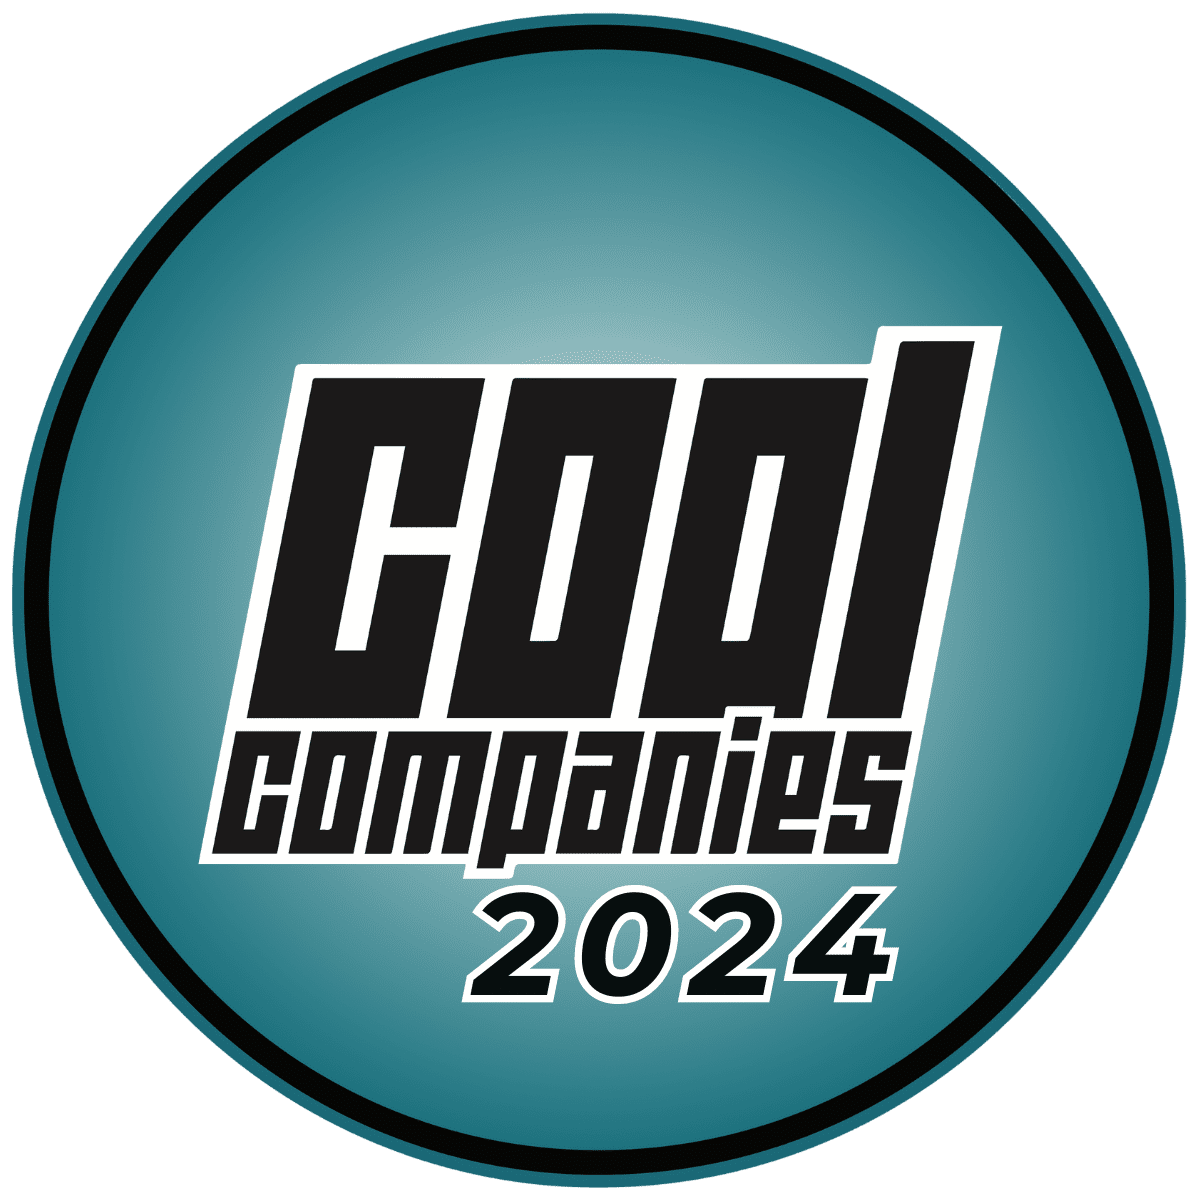 Cool Companies - Connect San Diego